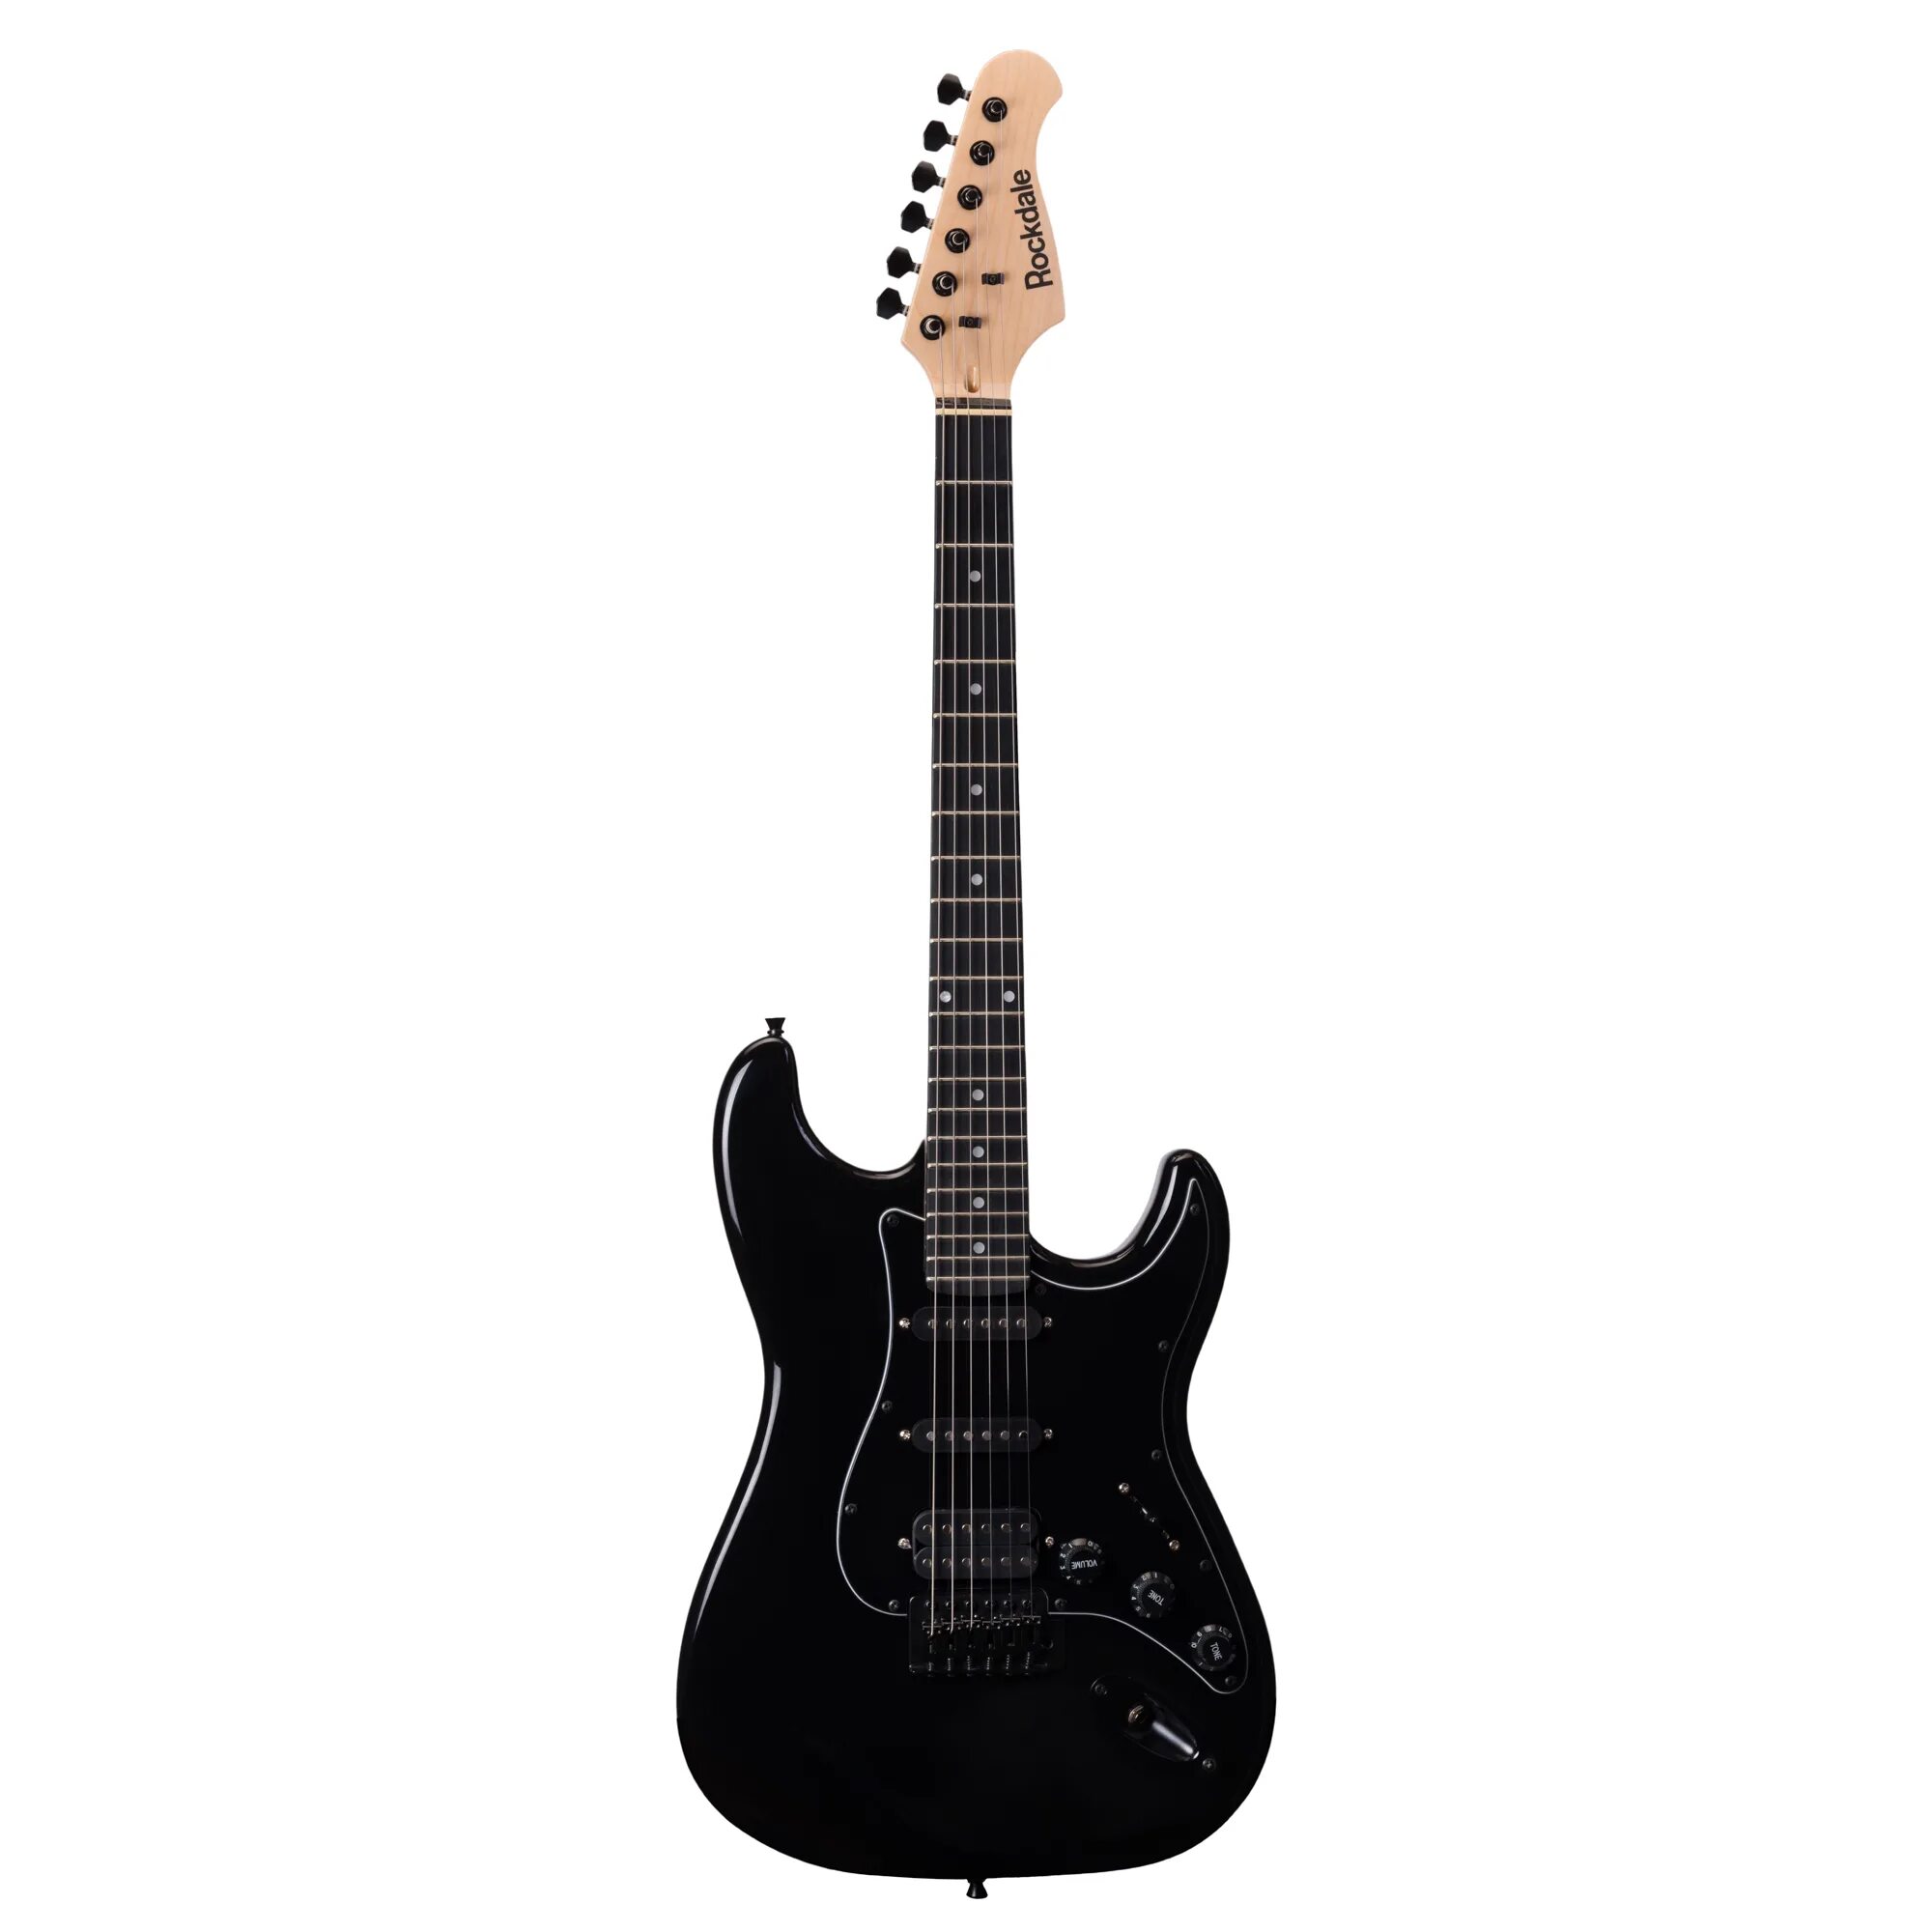 Rockdale Stars Black Limited Edition HSS BK. Бас-гитара Stagg SBP-30 Black. Rockdale Stars HSS. Бас-гитара Aria 313-mk2 opn.